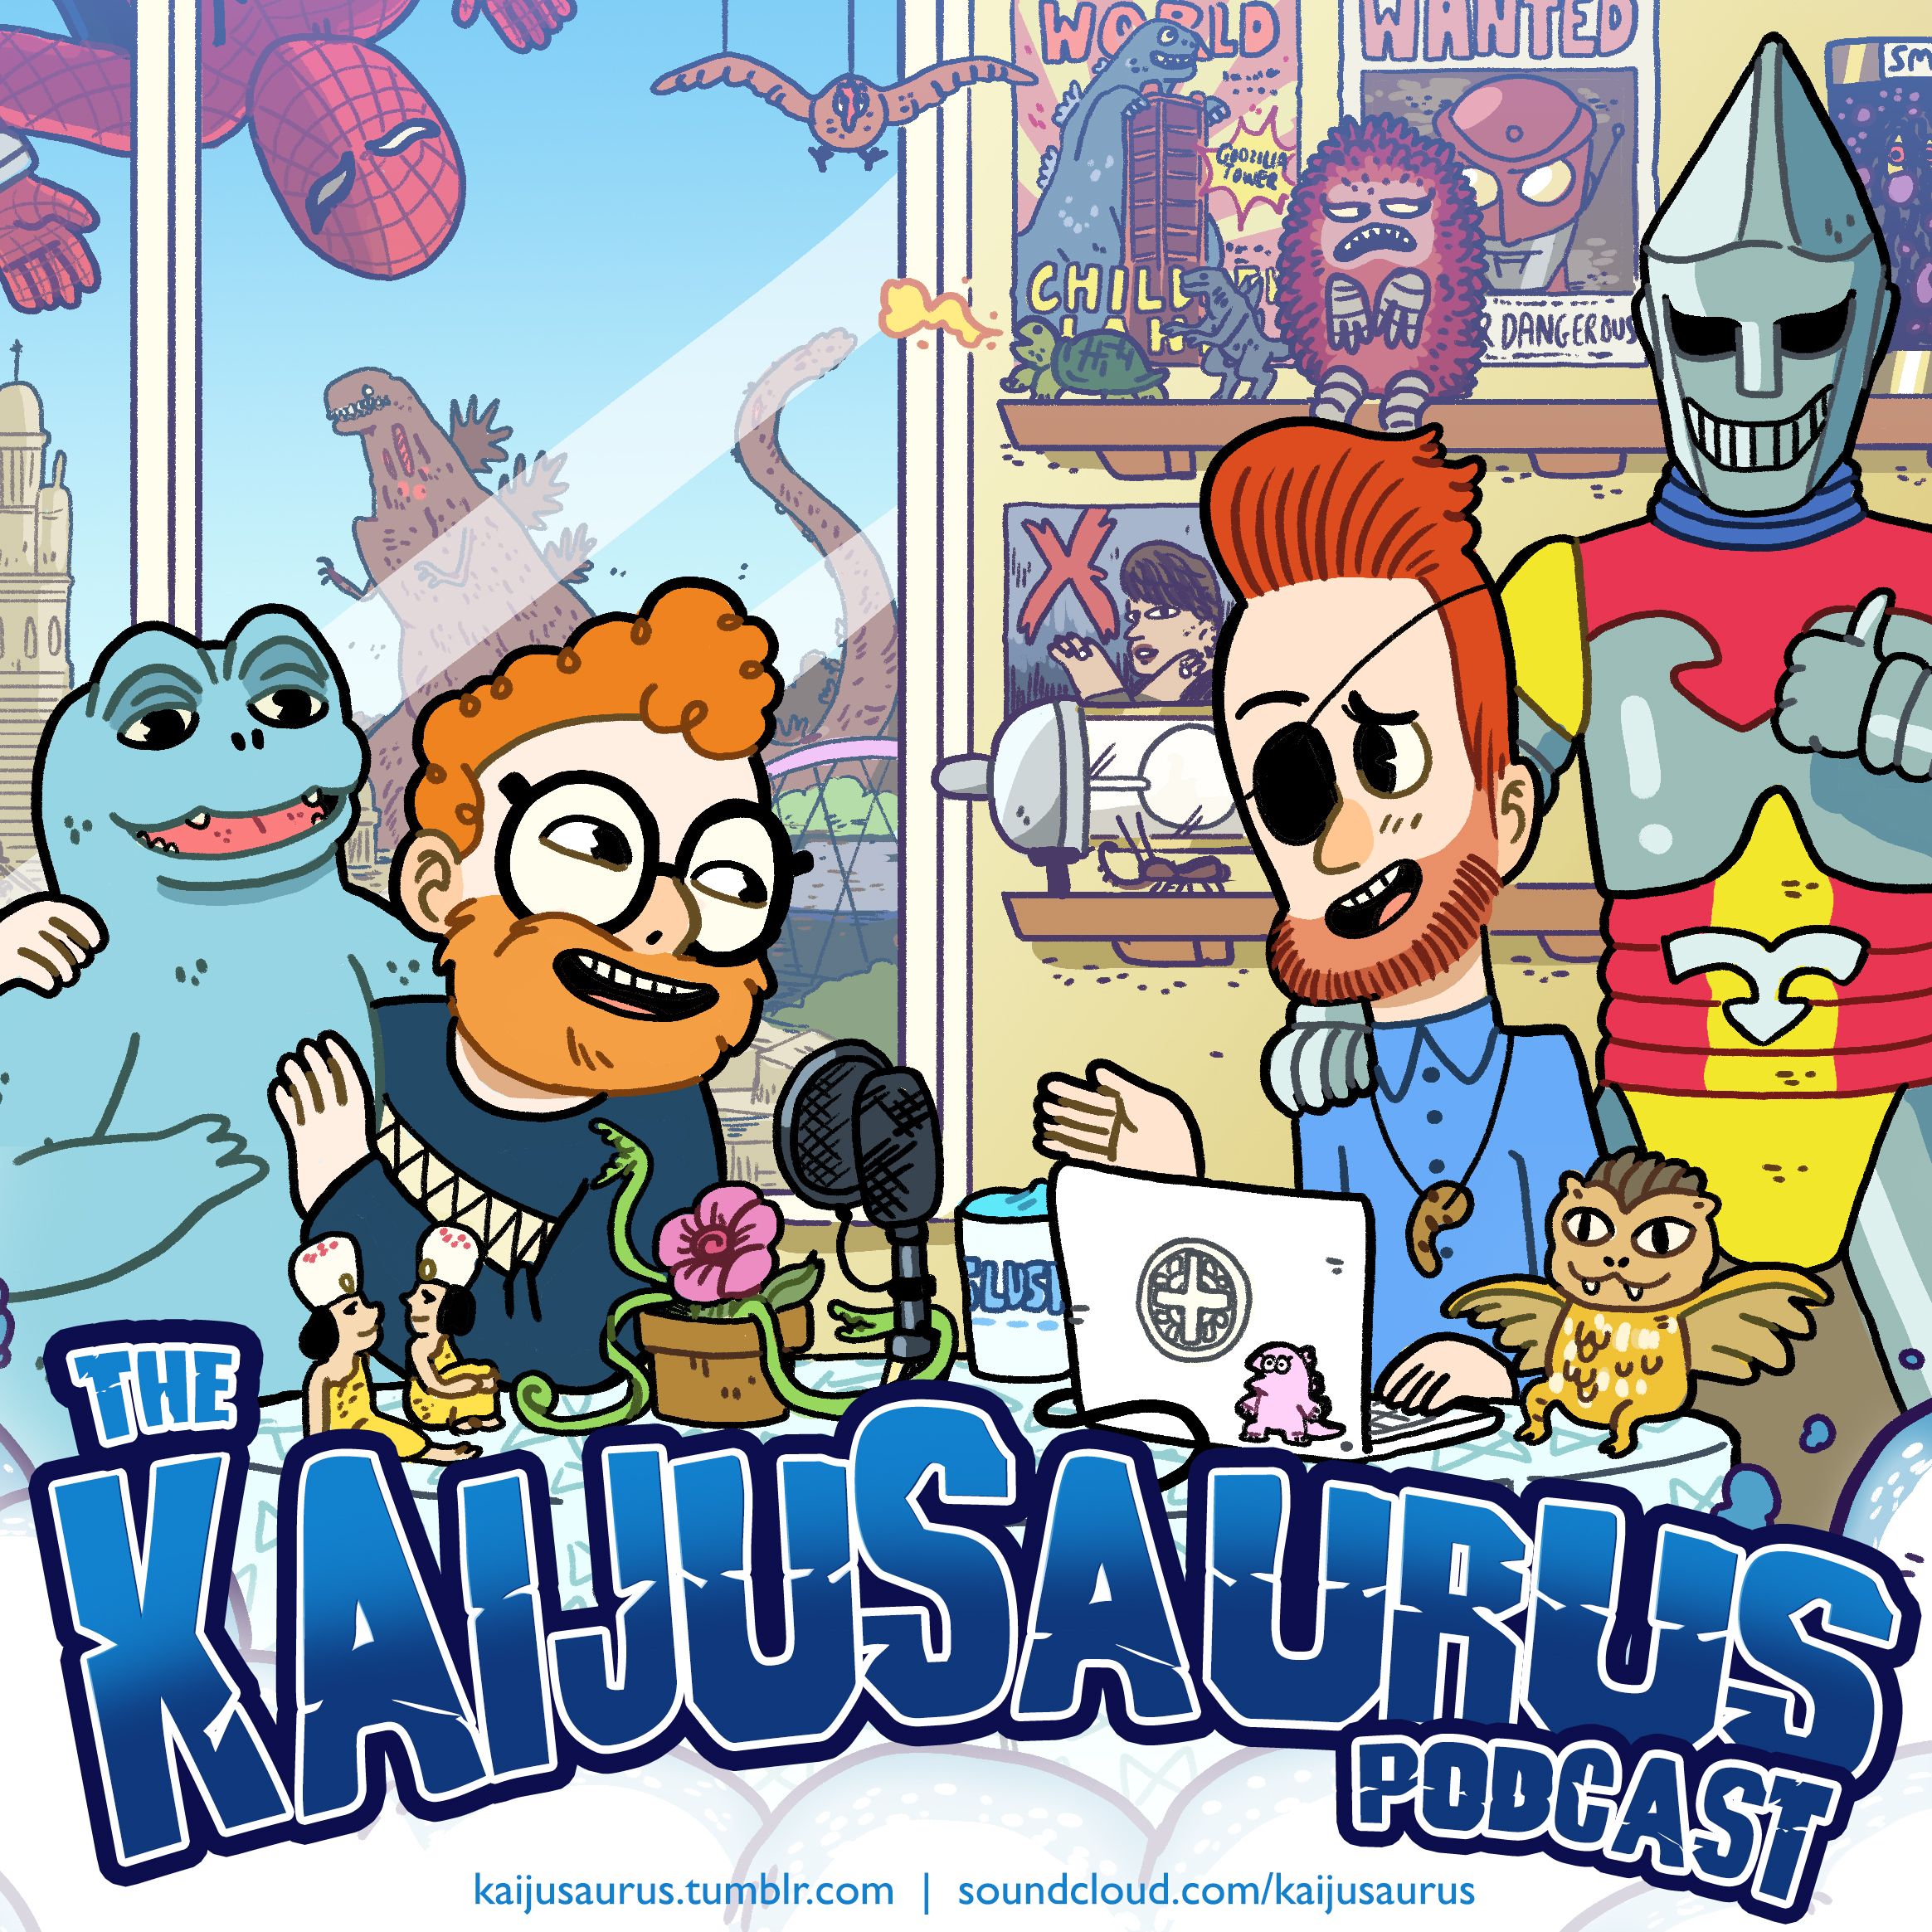 The Kaijusaurus Podcast